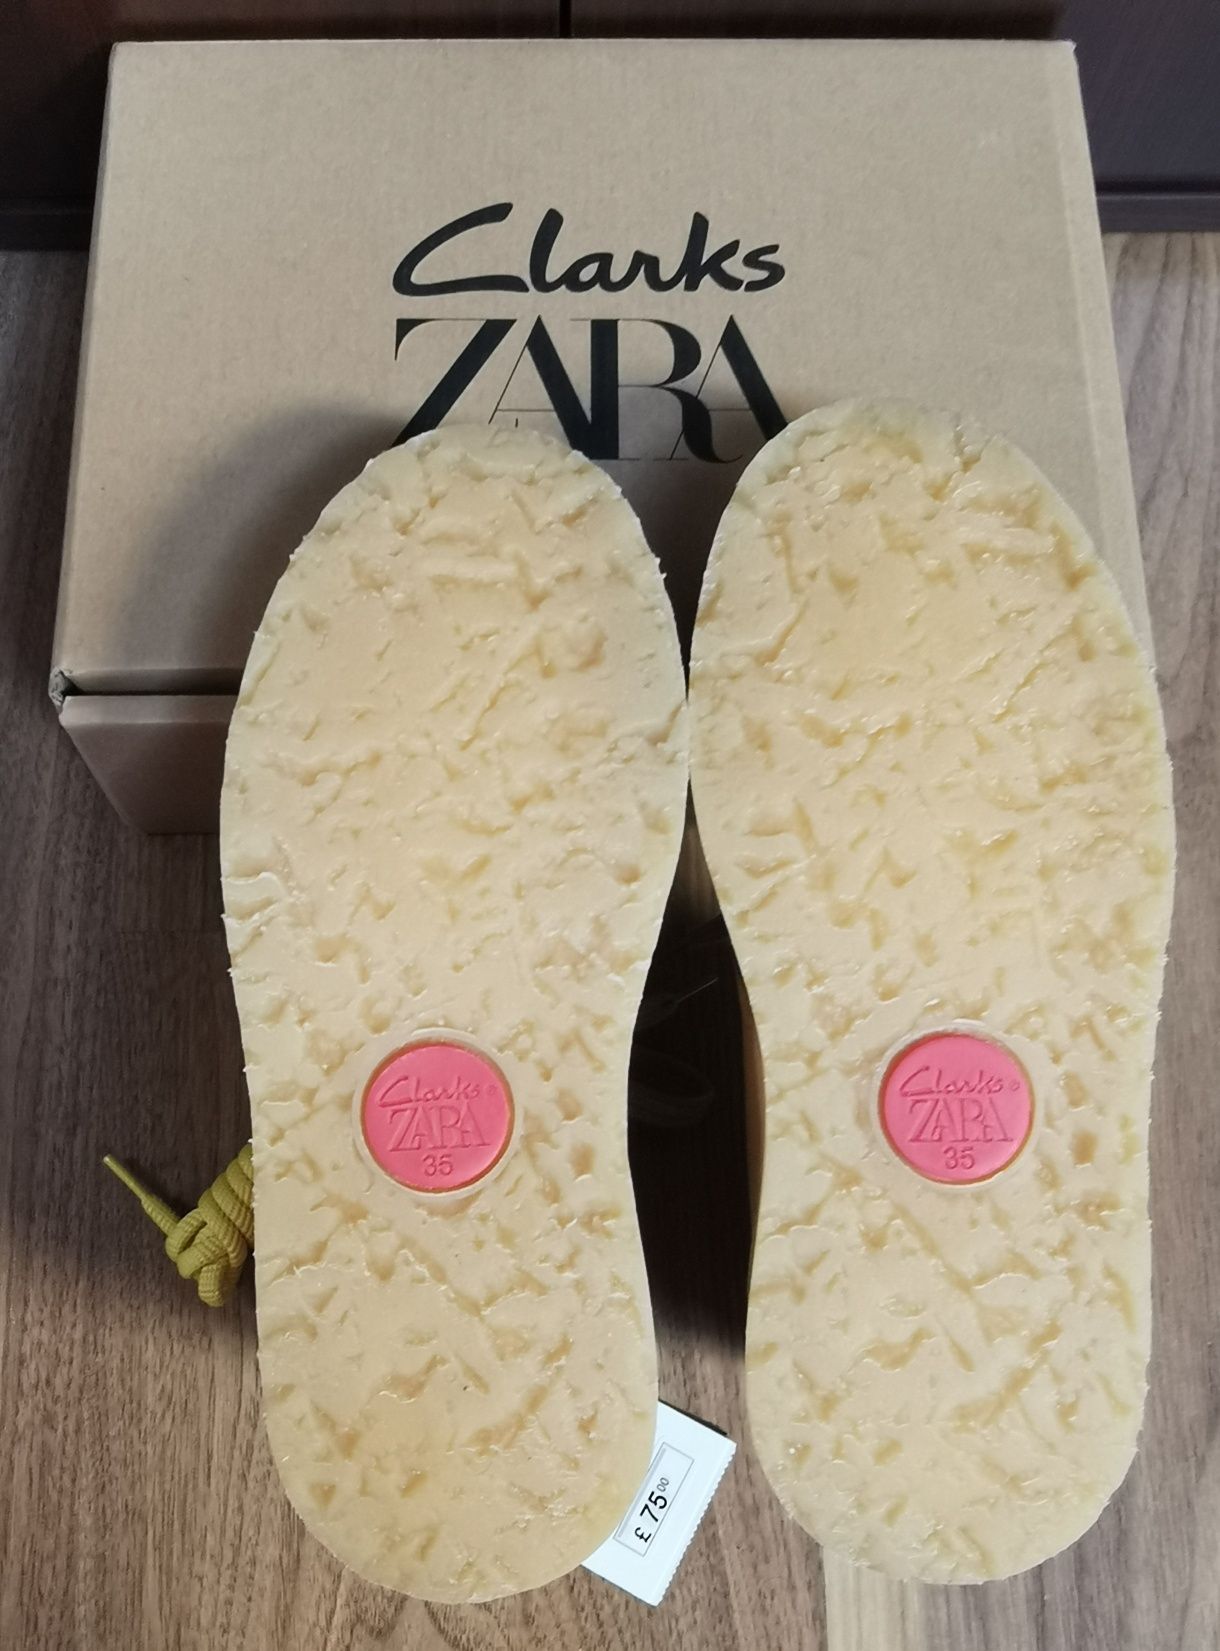 ZARA Clarks skórzane botki roz. 35 inspiracja Desert Boot Clarks